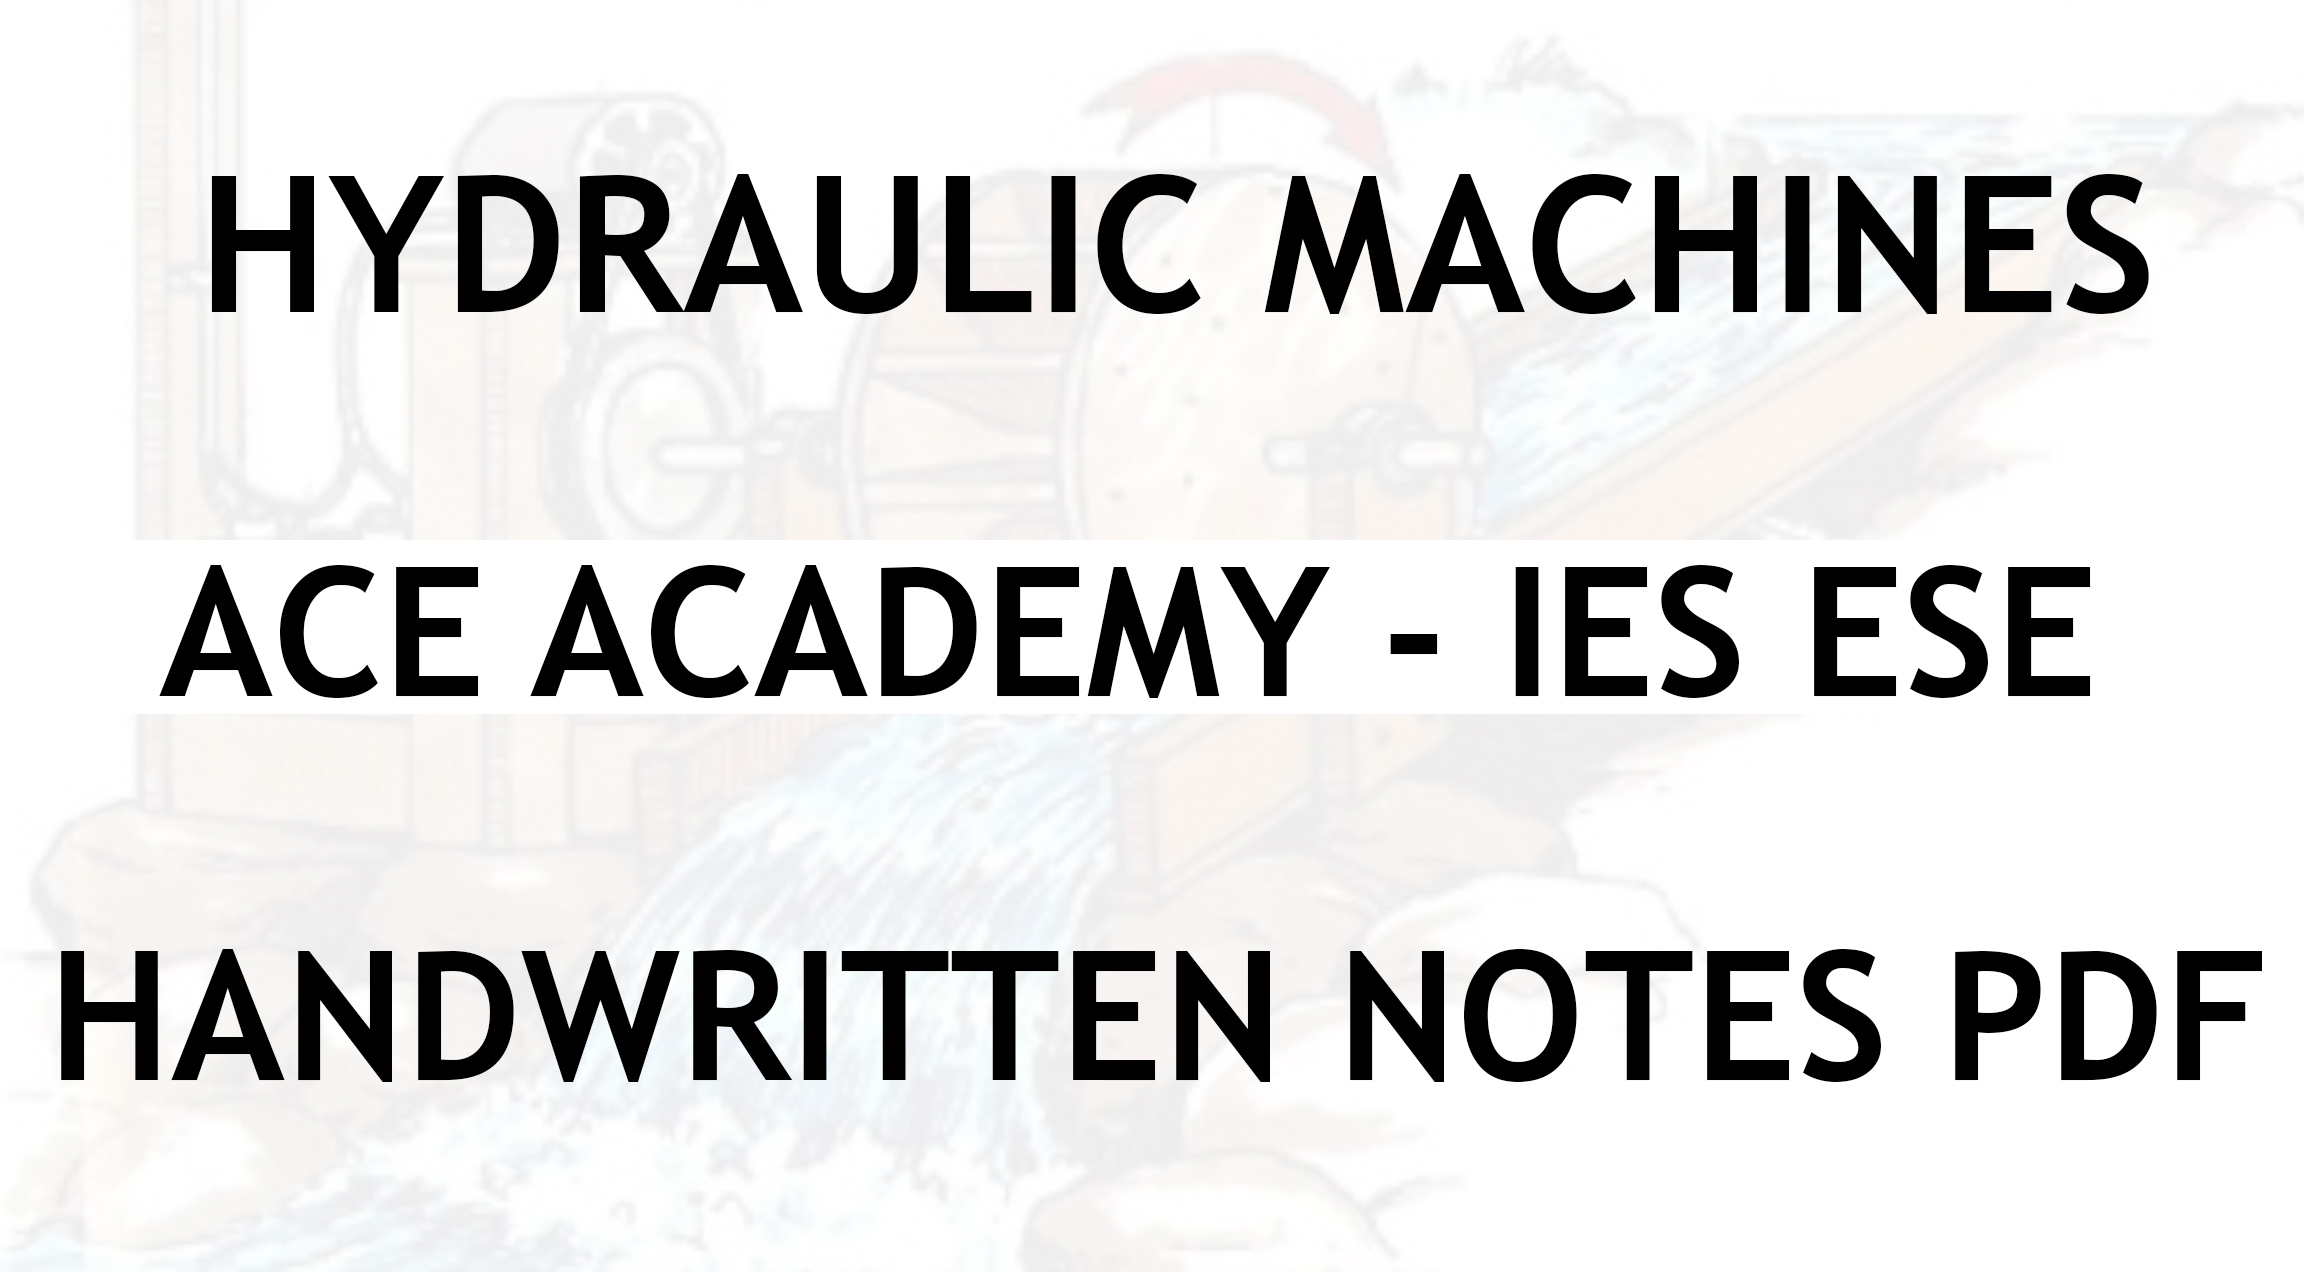 Hydraulic Machines IES ESE Ace Academy Handwritten Notes PDF